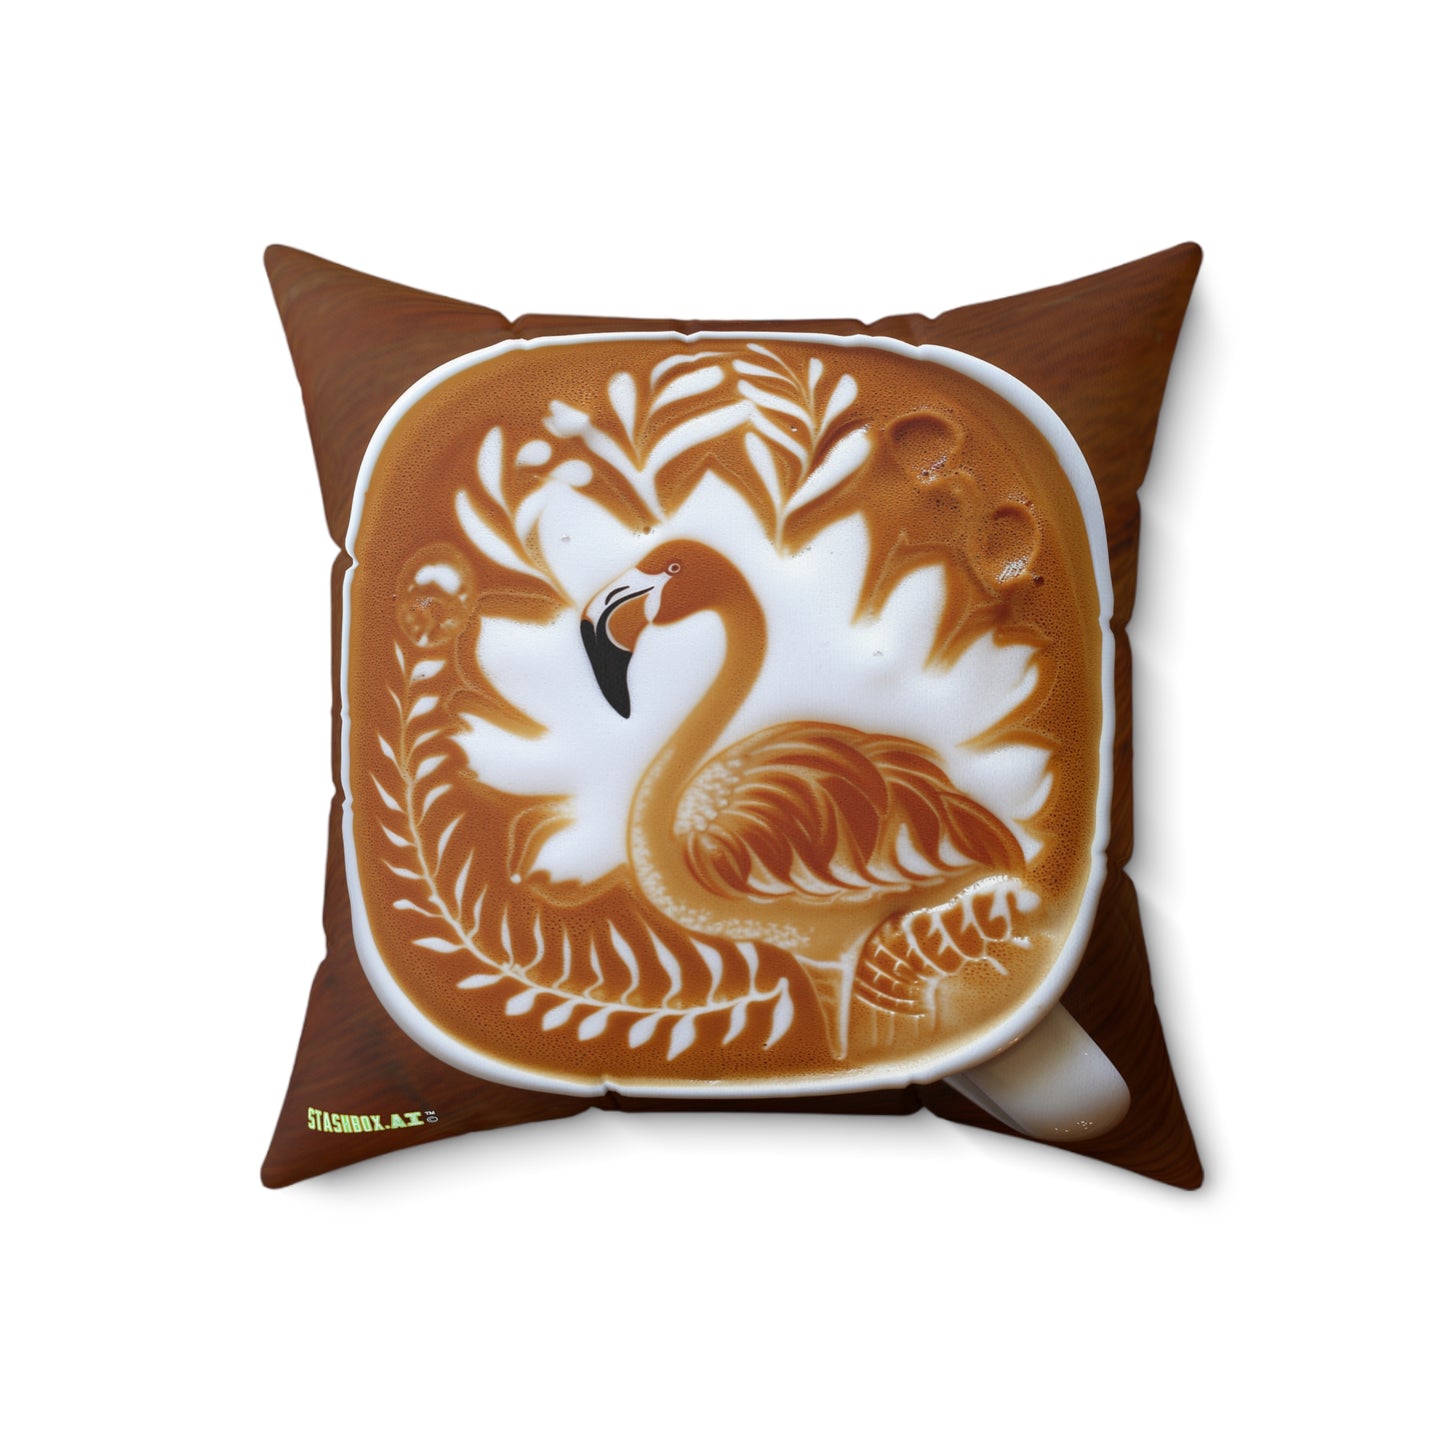 Faux Suede Square Pillow Flamingo Latte art and Tropical Scene 001 002